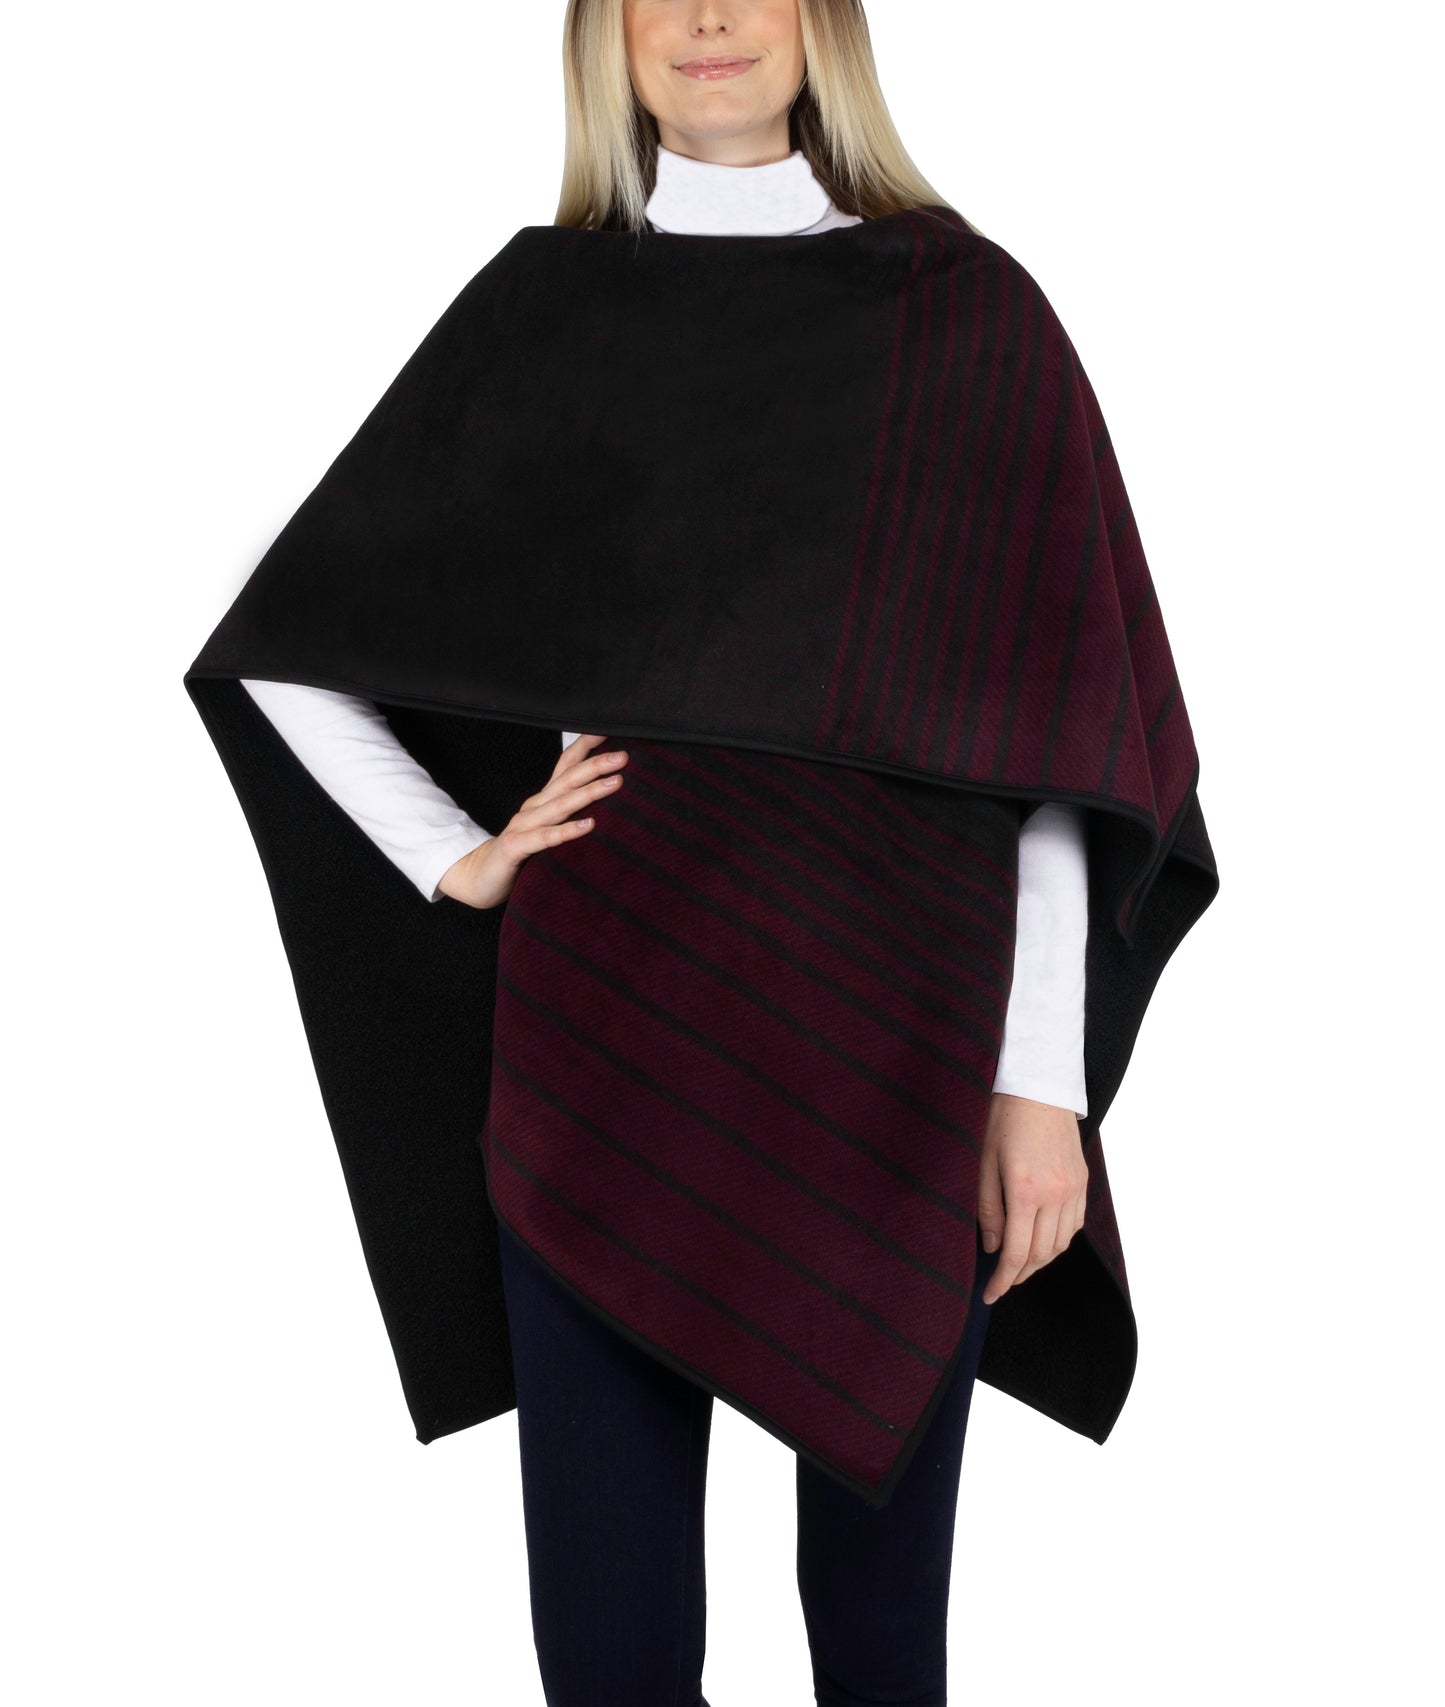 Black with Maroon Stripe Women's Reversible Fashion Wrap